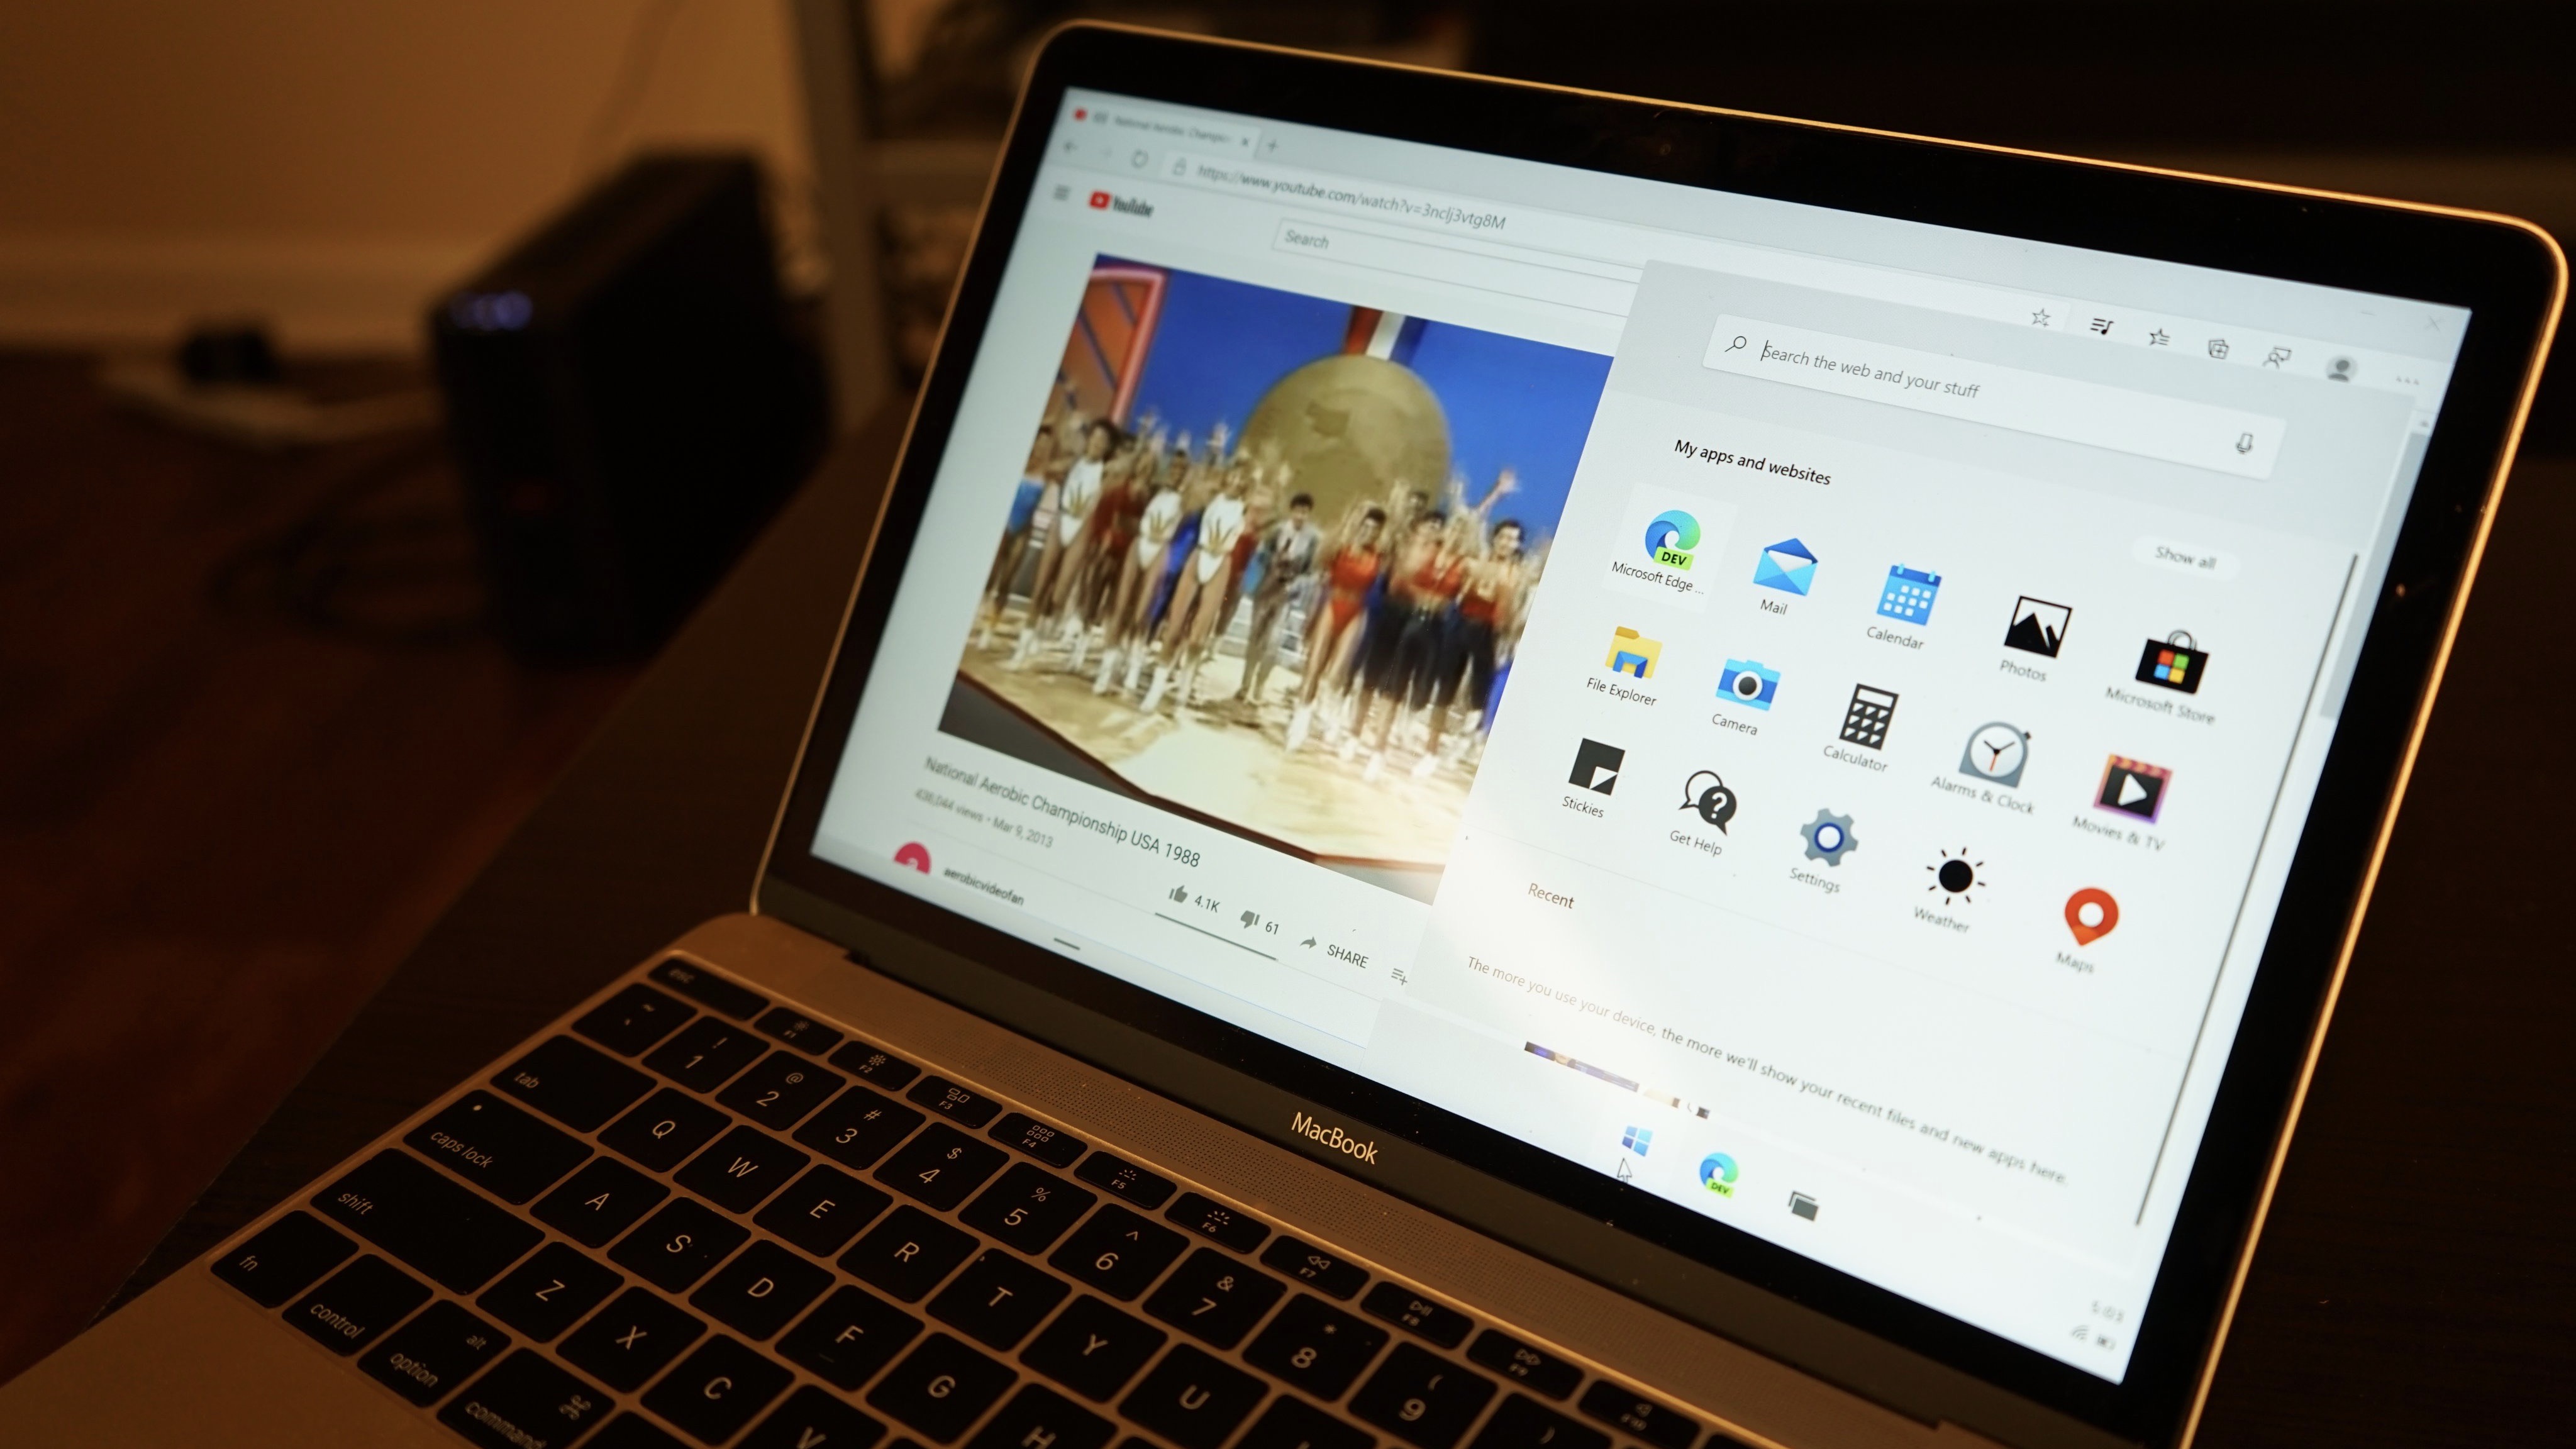 windows 7 on macbook pro 2010